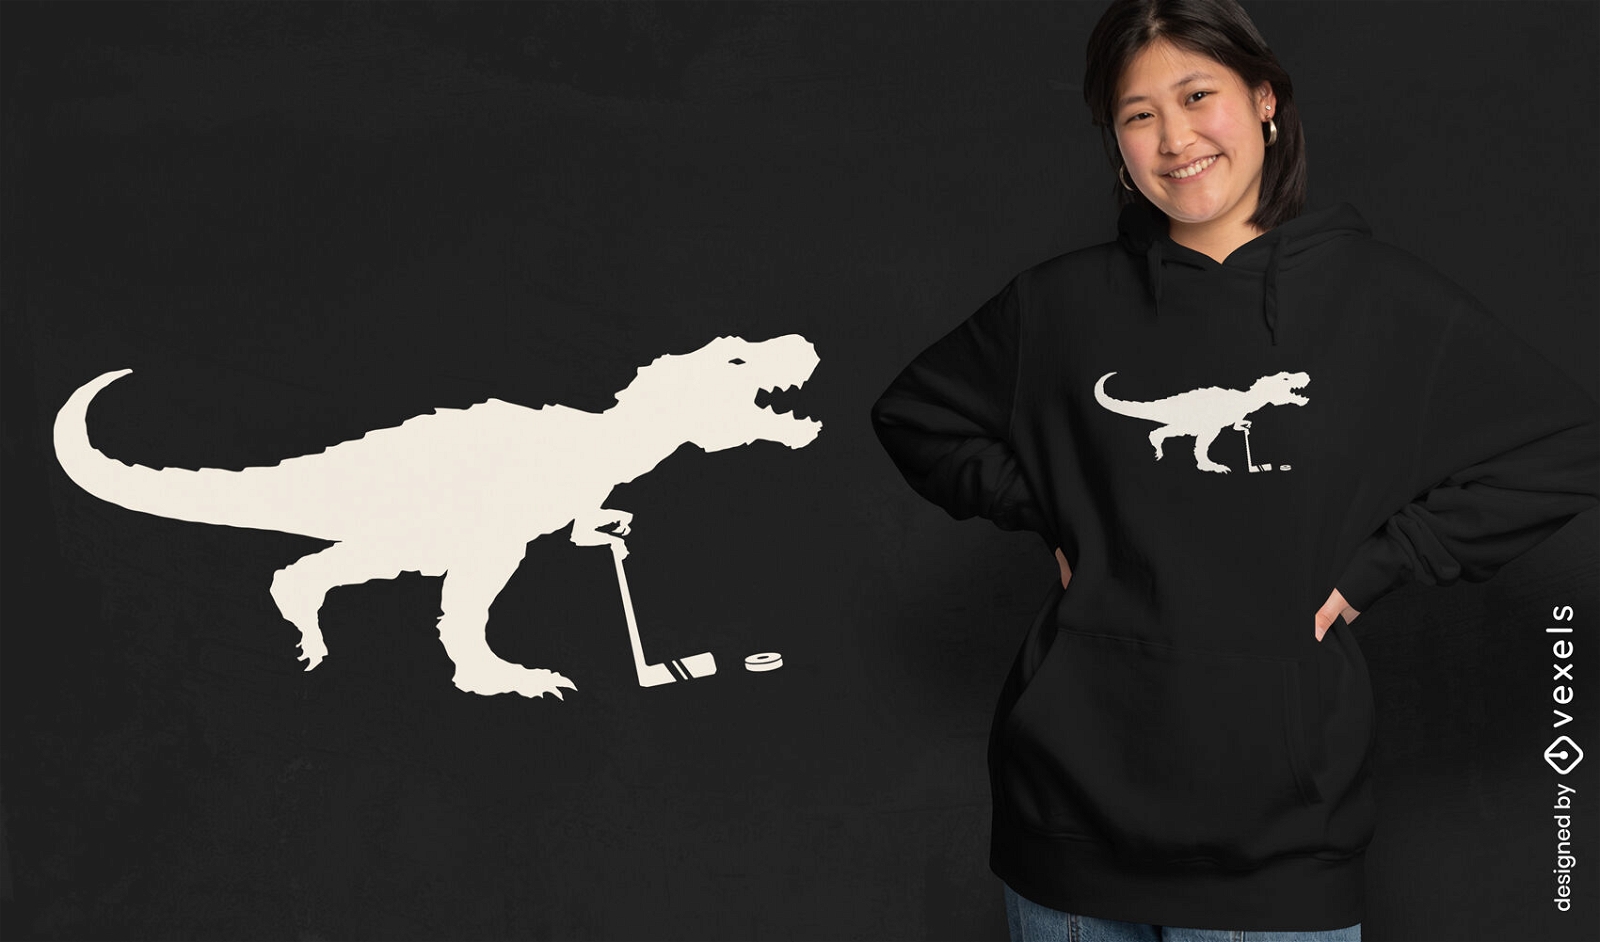 T-rex playing hockey silhouette t-shirt design